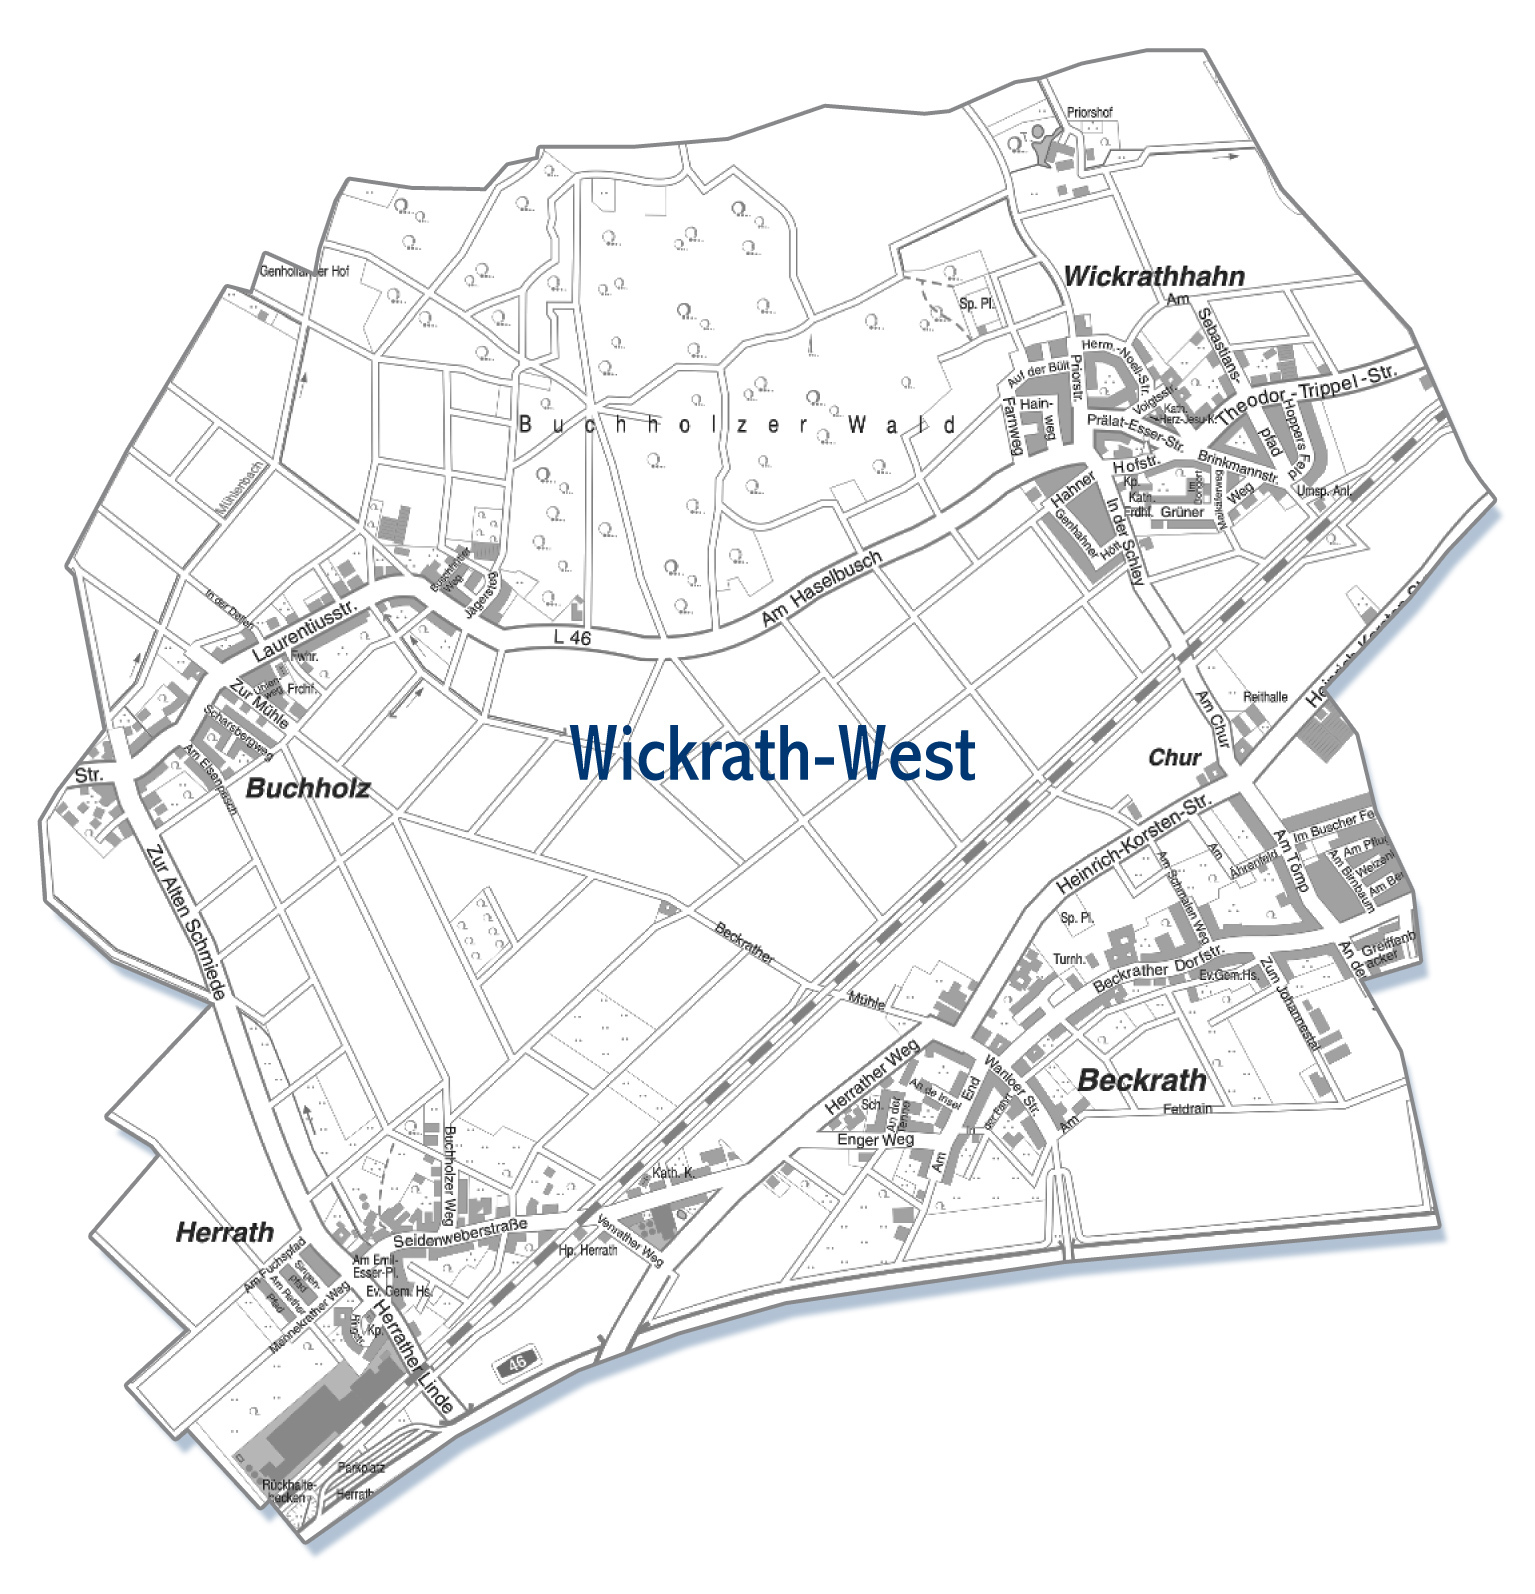 Wickrath-West